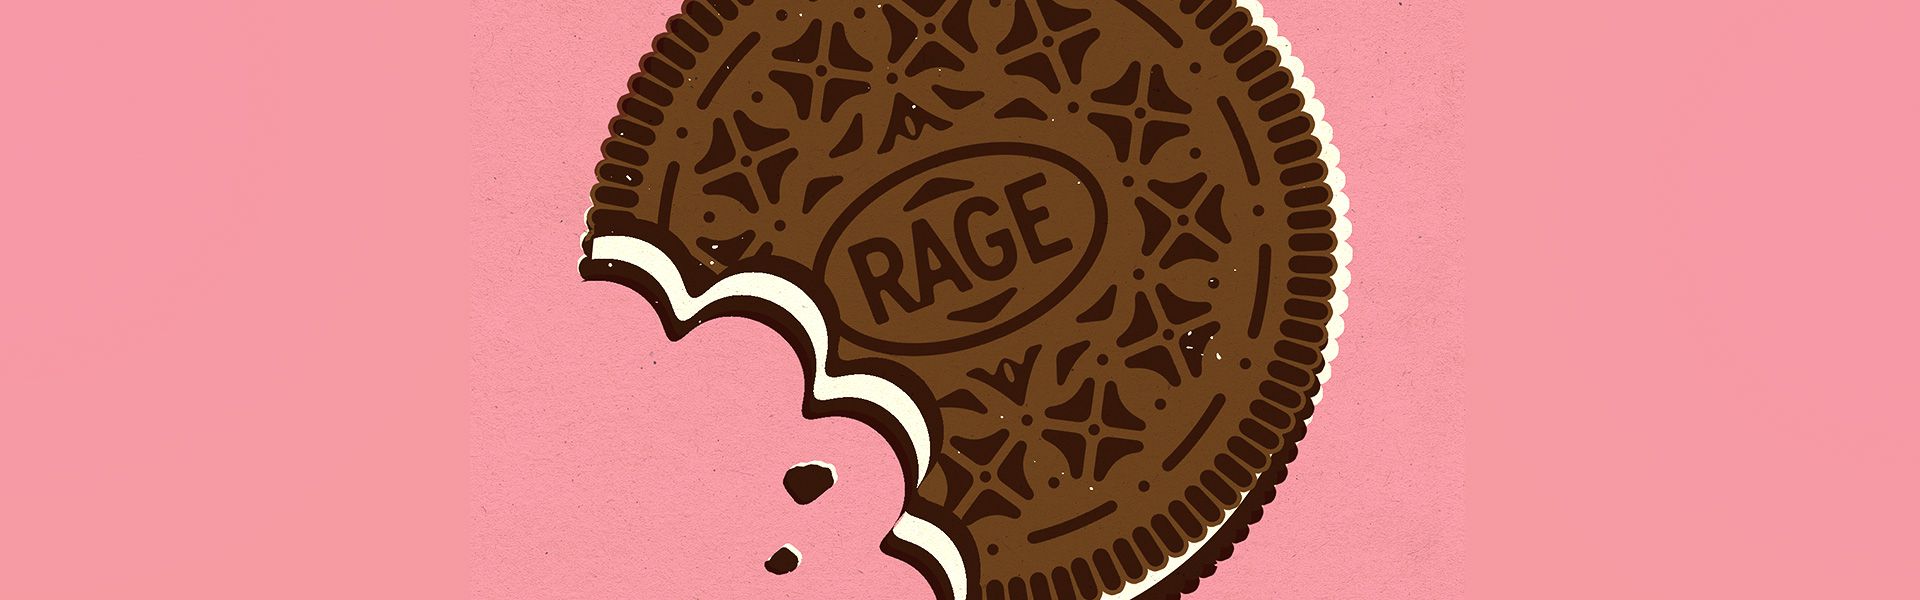 Rage Against the Haze - Oreo Cookie Illustration